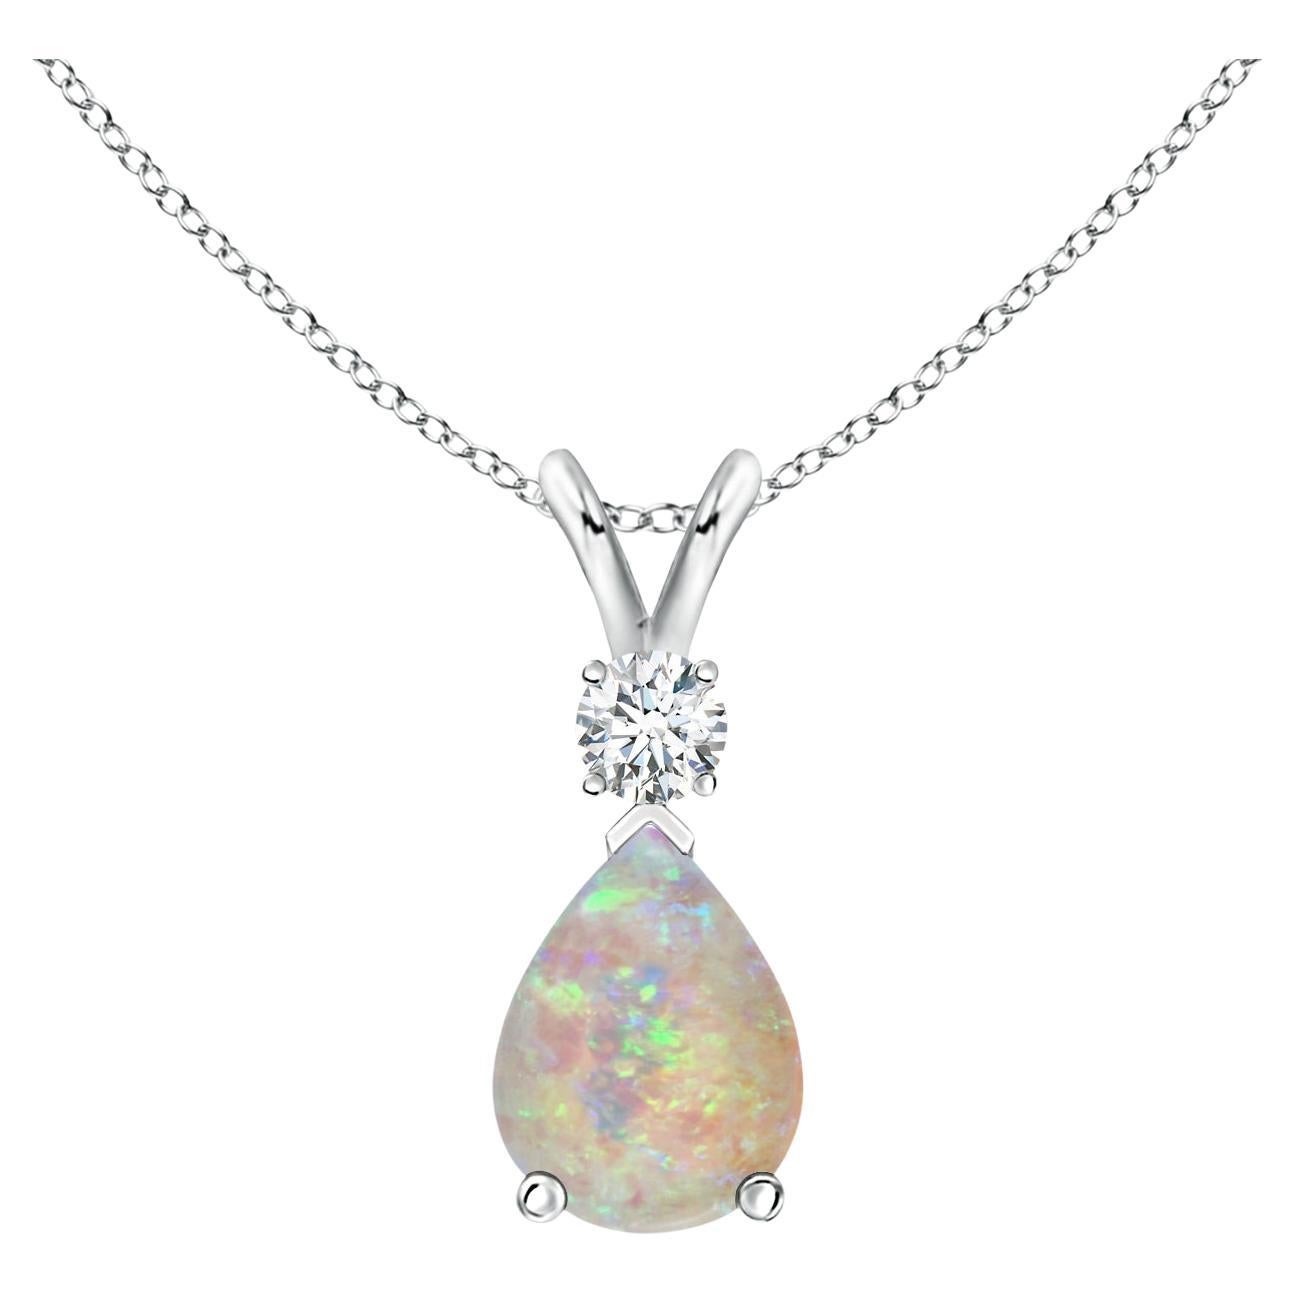 ANGARA Natural 0.70ct Opal Teardrop Pendant with Diamond in Platinum